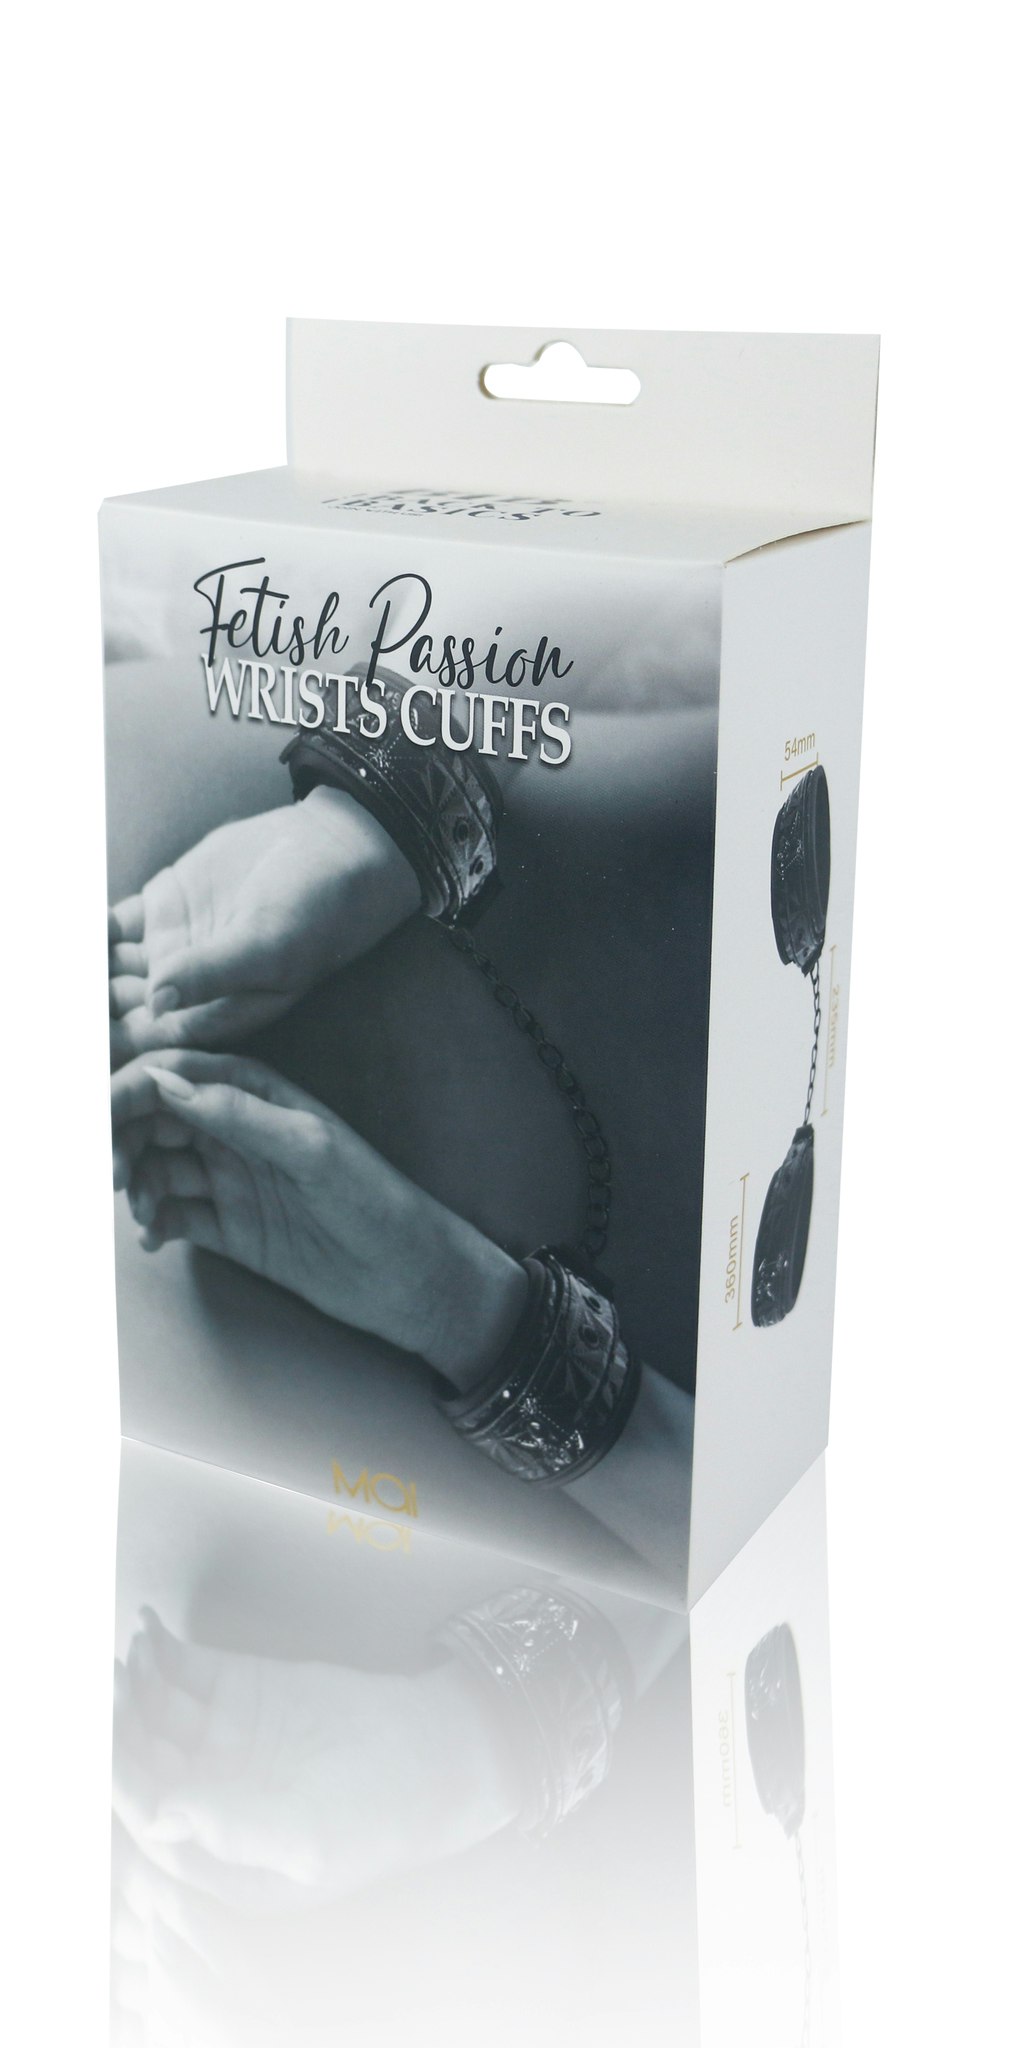 Back to Basics fetish passion - Wrist cuffs, Black